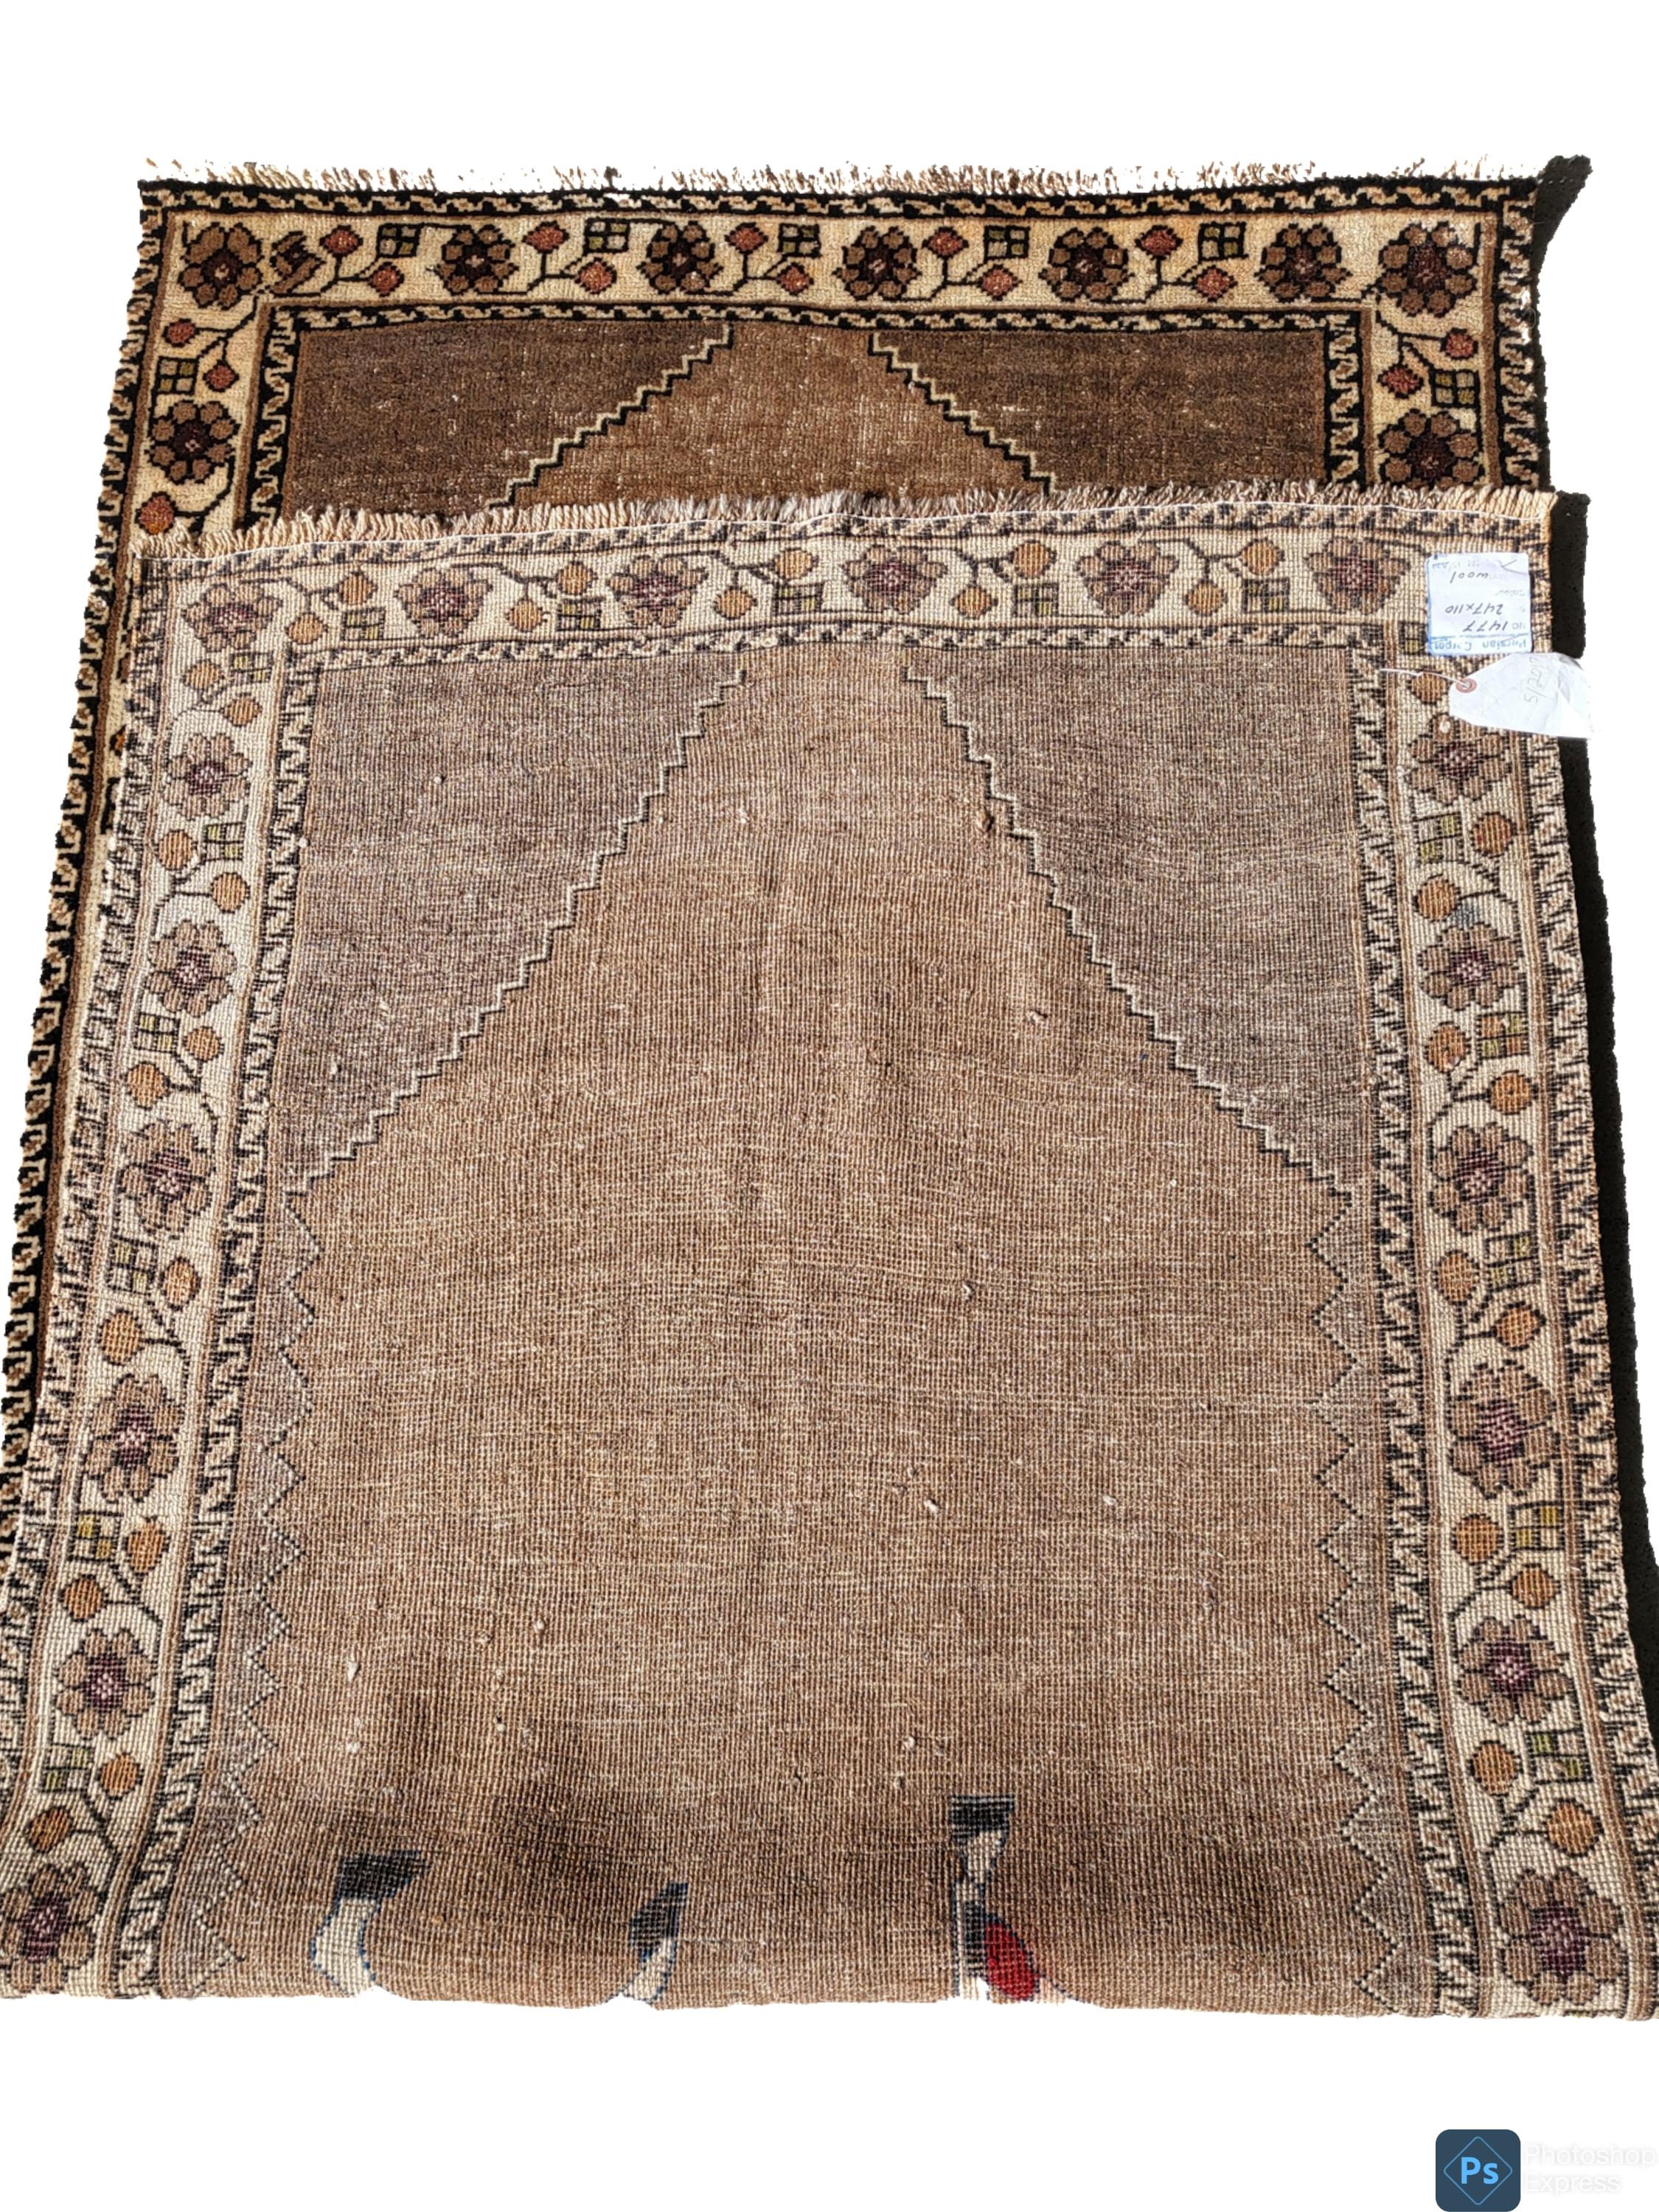 Tribal Whimsical 100+ Year Old Kashkooli Gabeh - Pictorial Nomadic Persian Rug For Sale